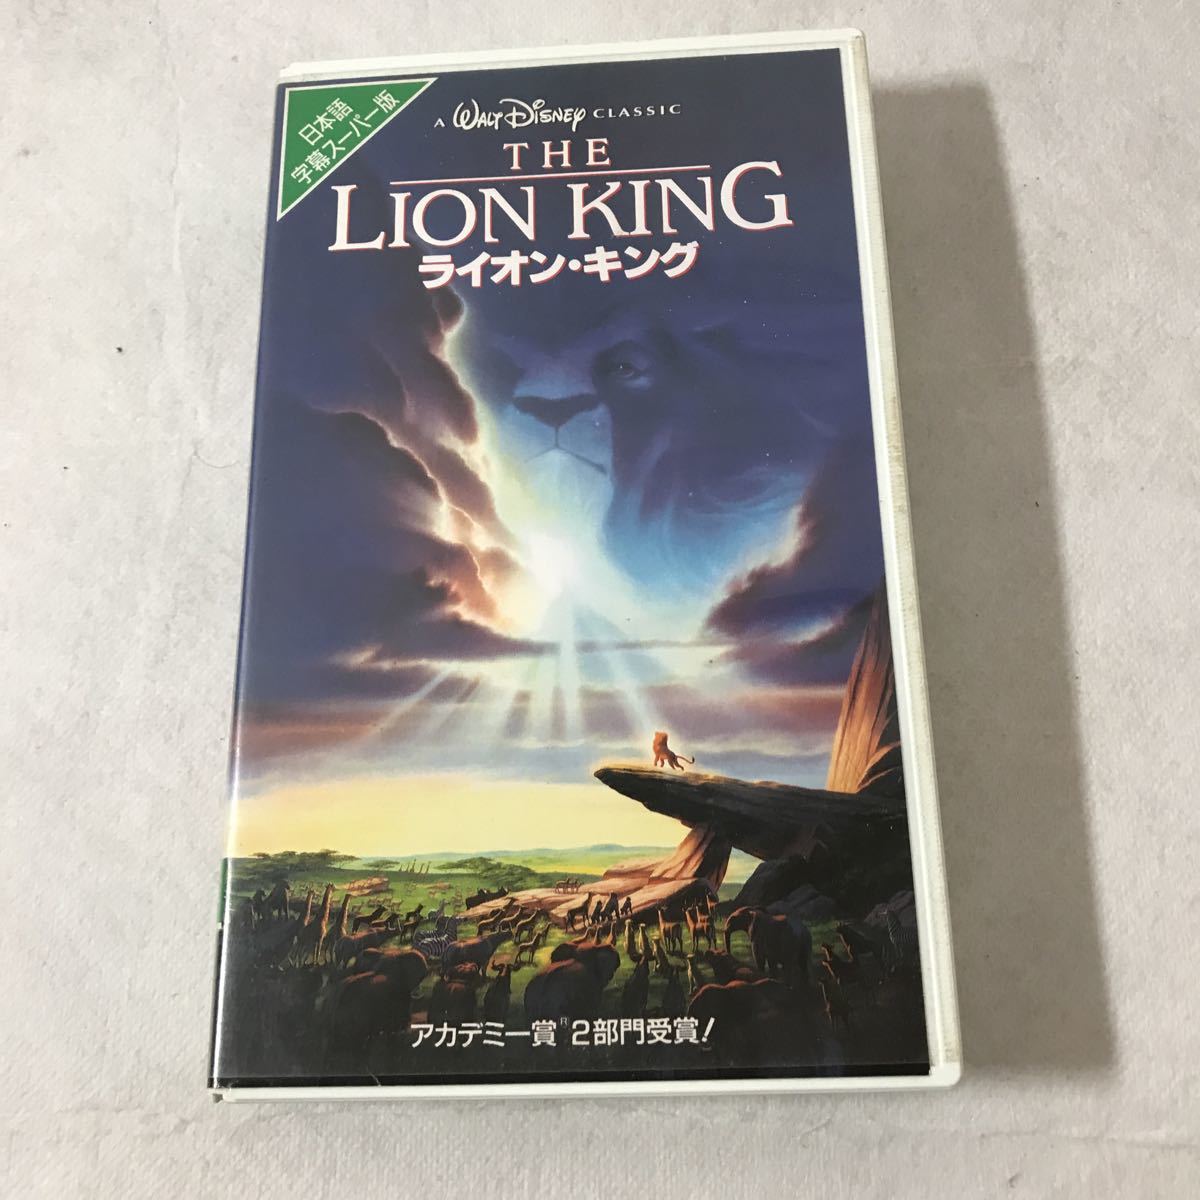  videotape Lion King Disney Classic 